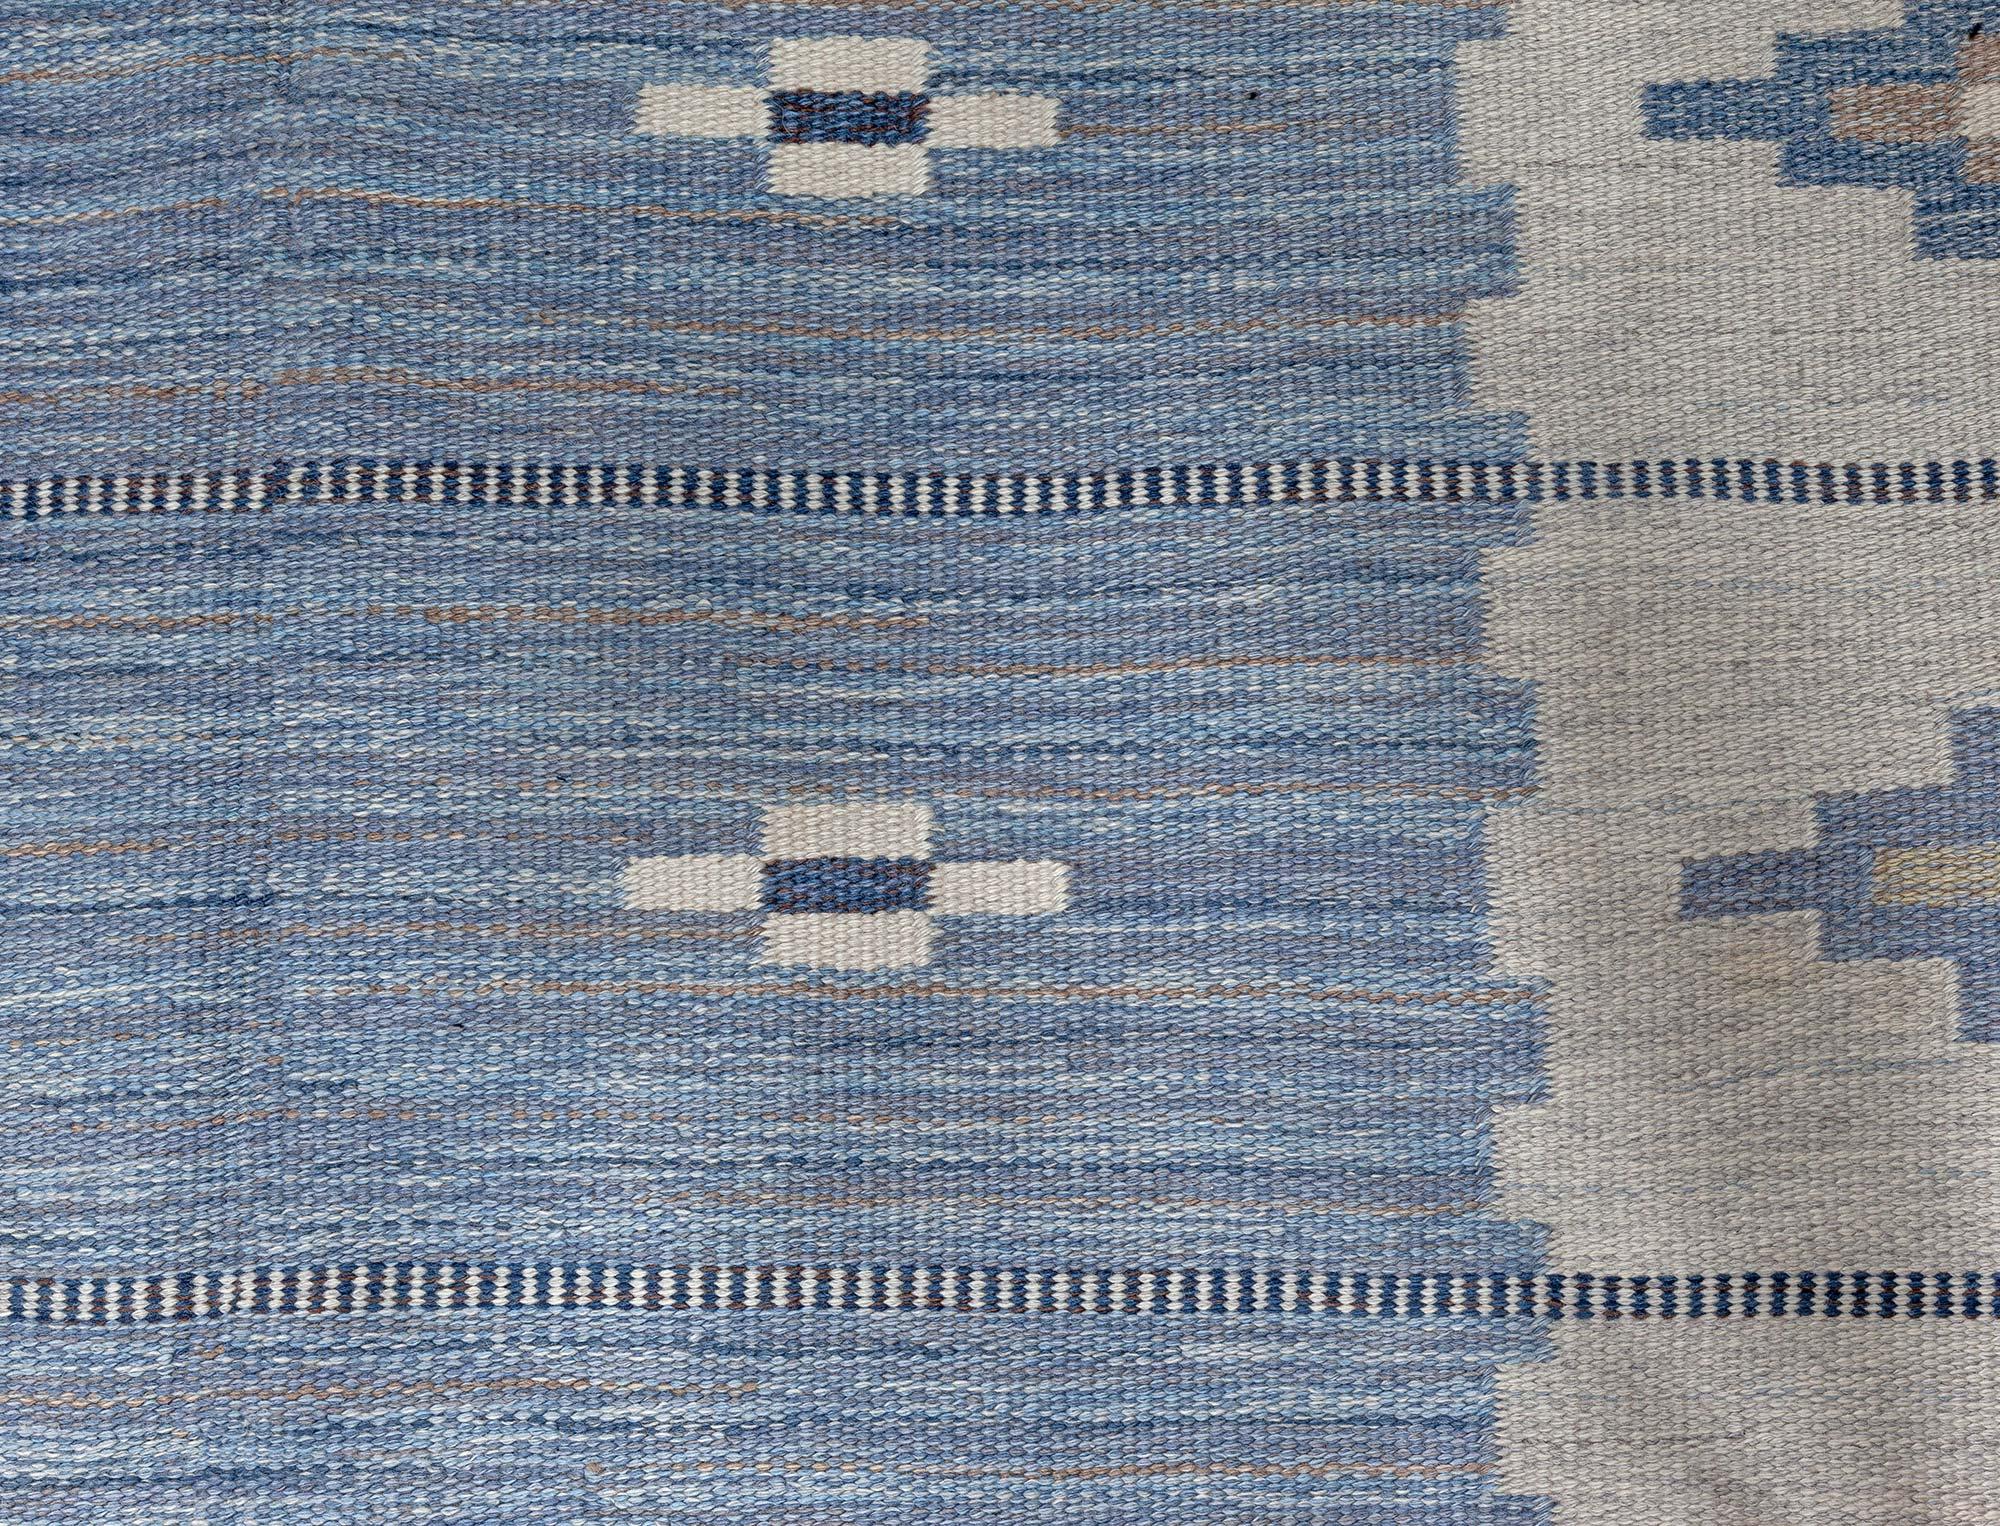 Vintage Swedish blue flat woven rug by Erik Lundberg
Size: 6'5